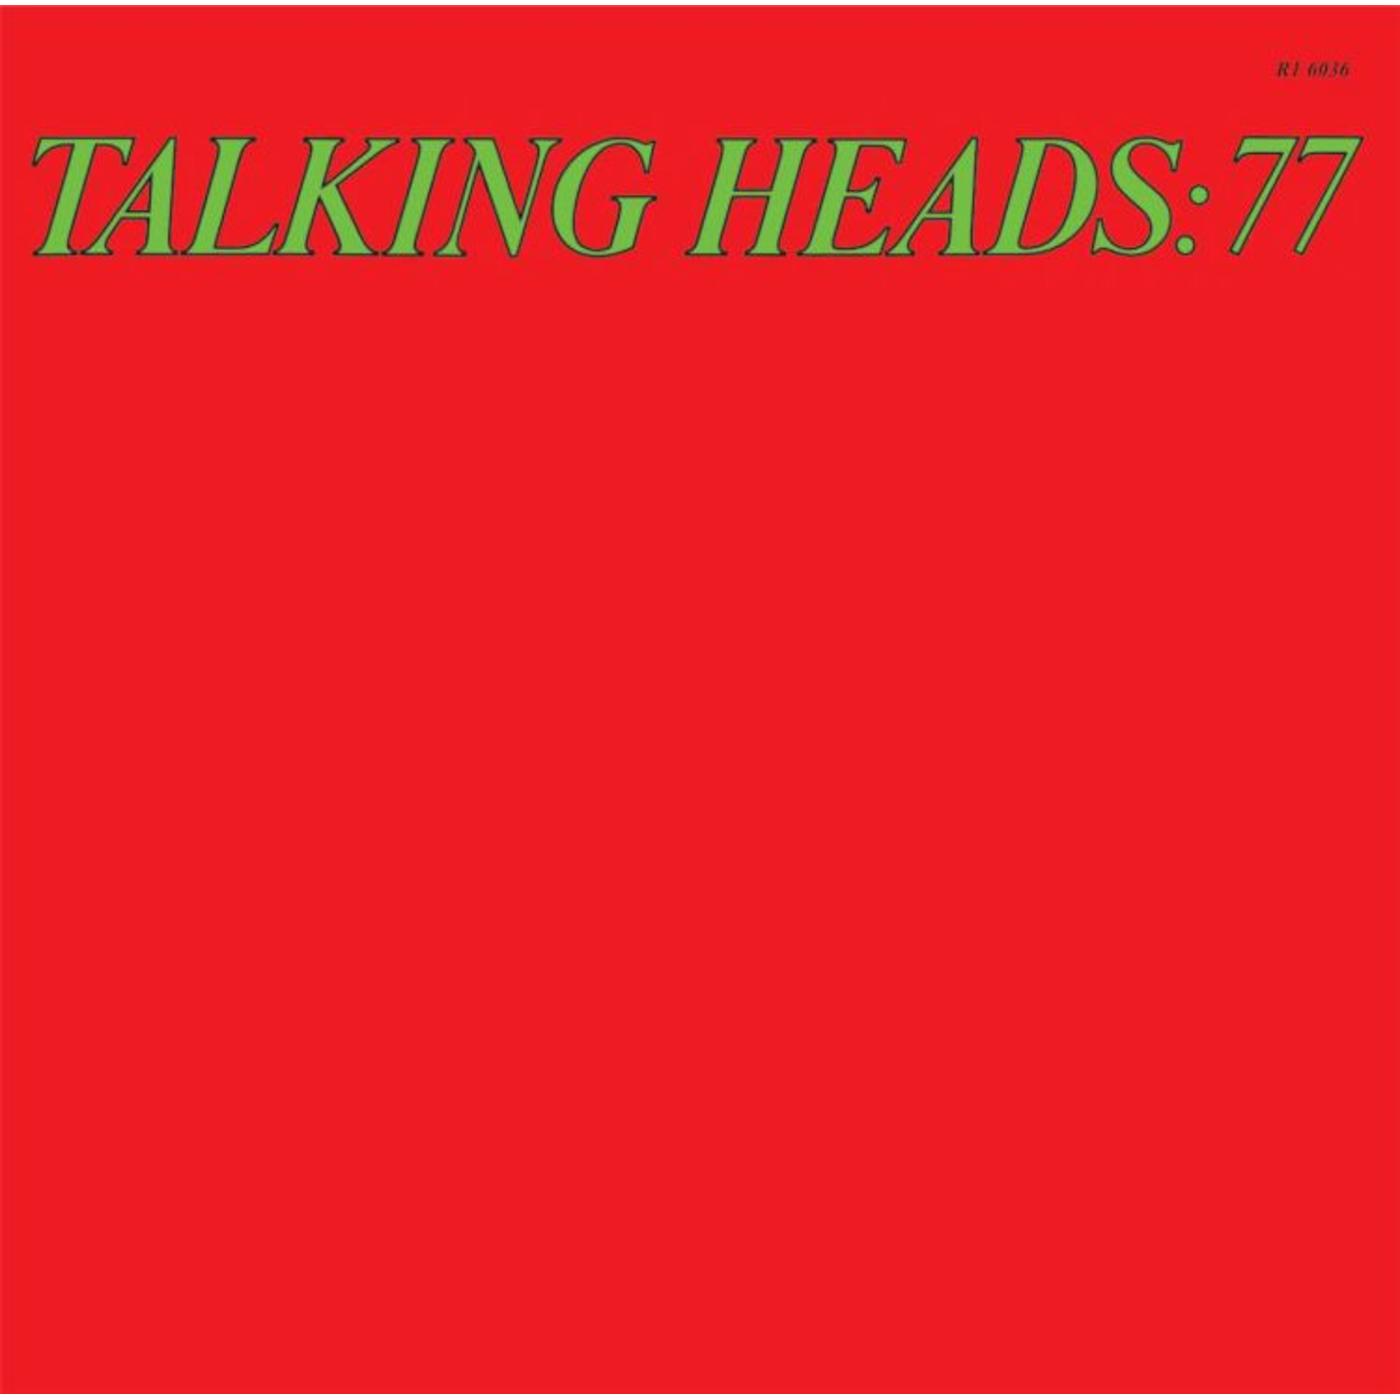 TALKING HEADS - TALKING HEADS: 77 - VINYL LP